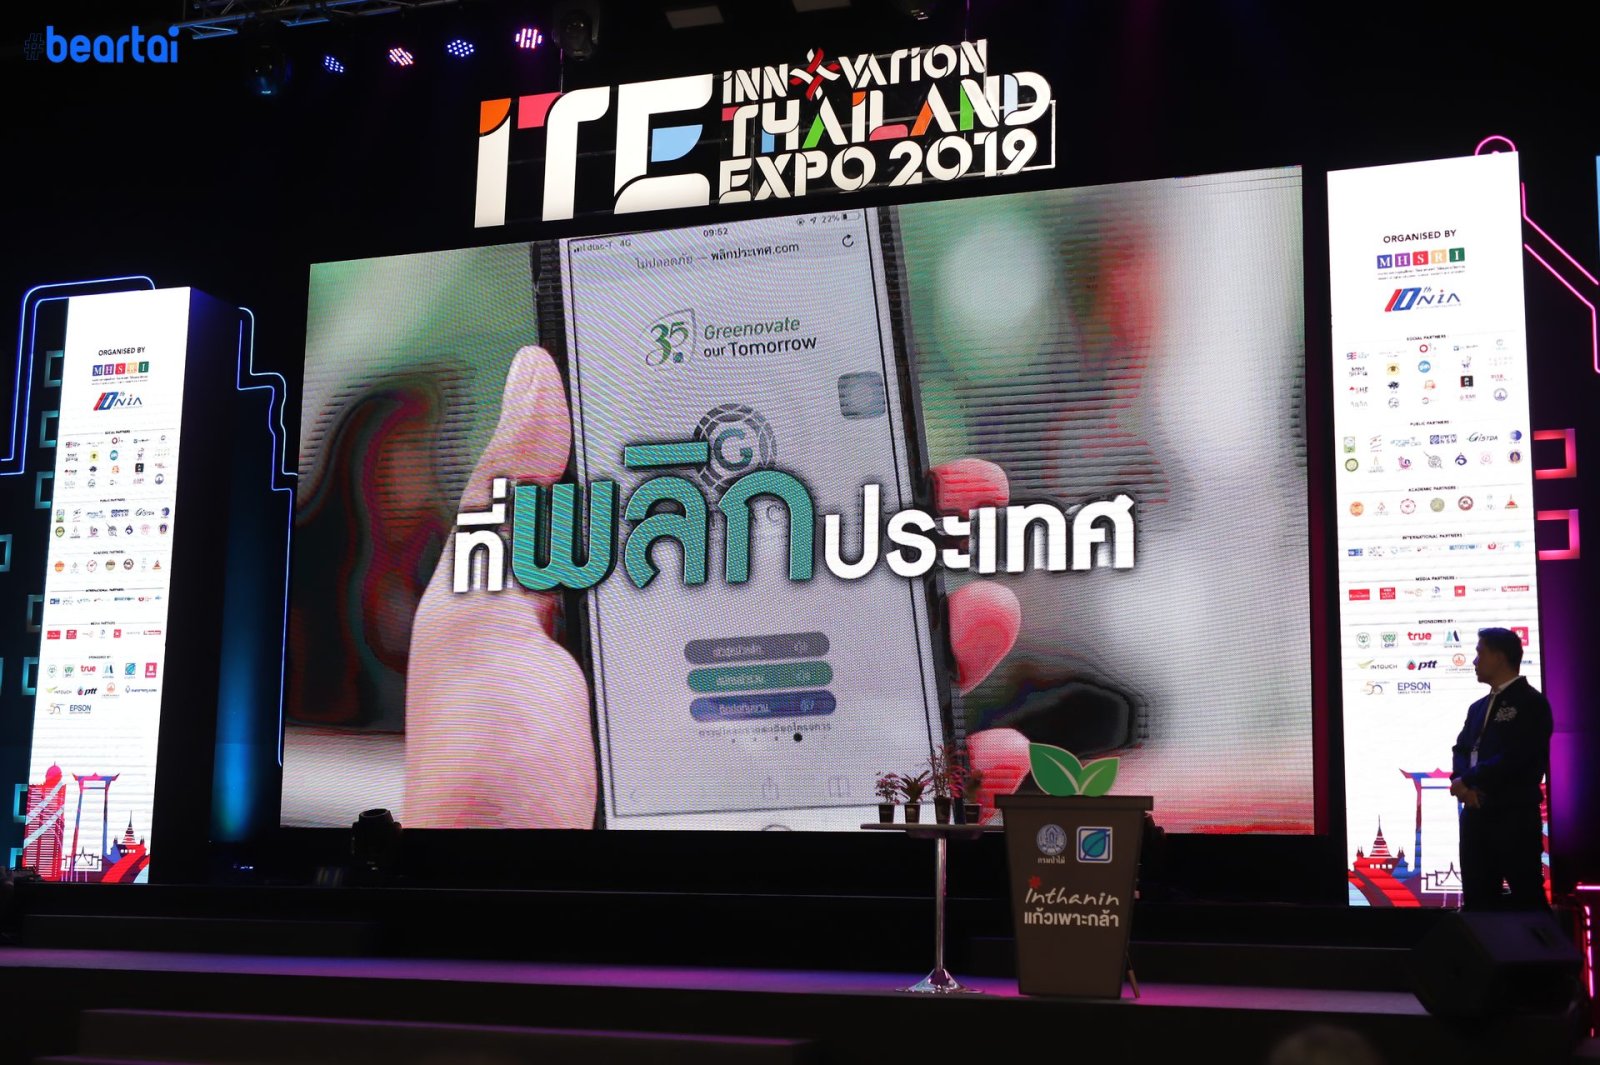 INNOVATION THAILAND EXPO 2019